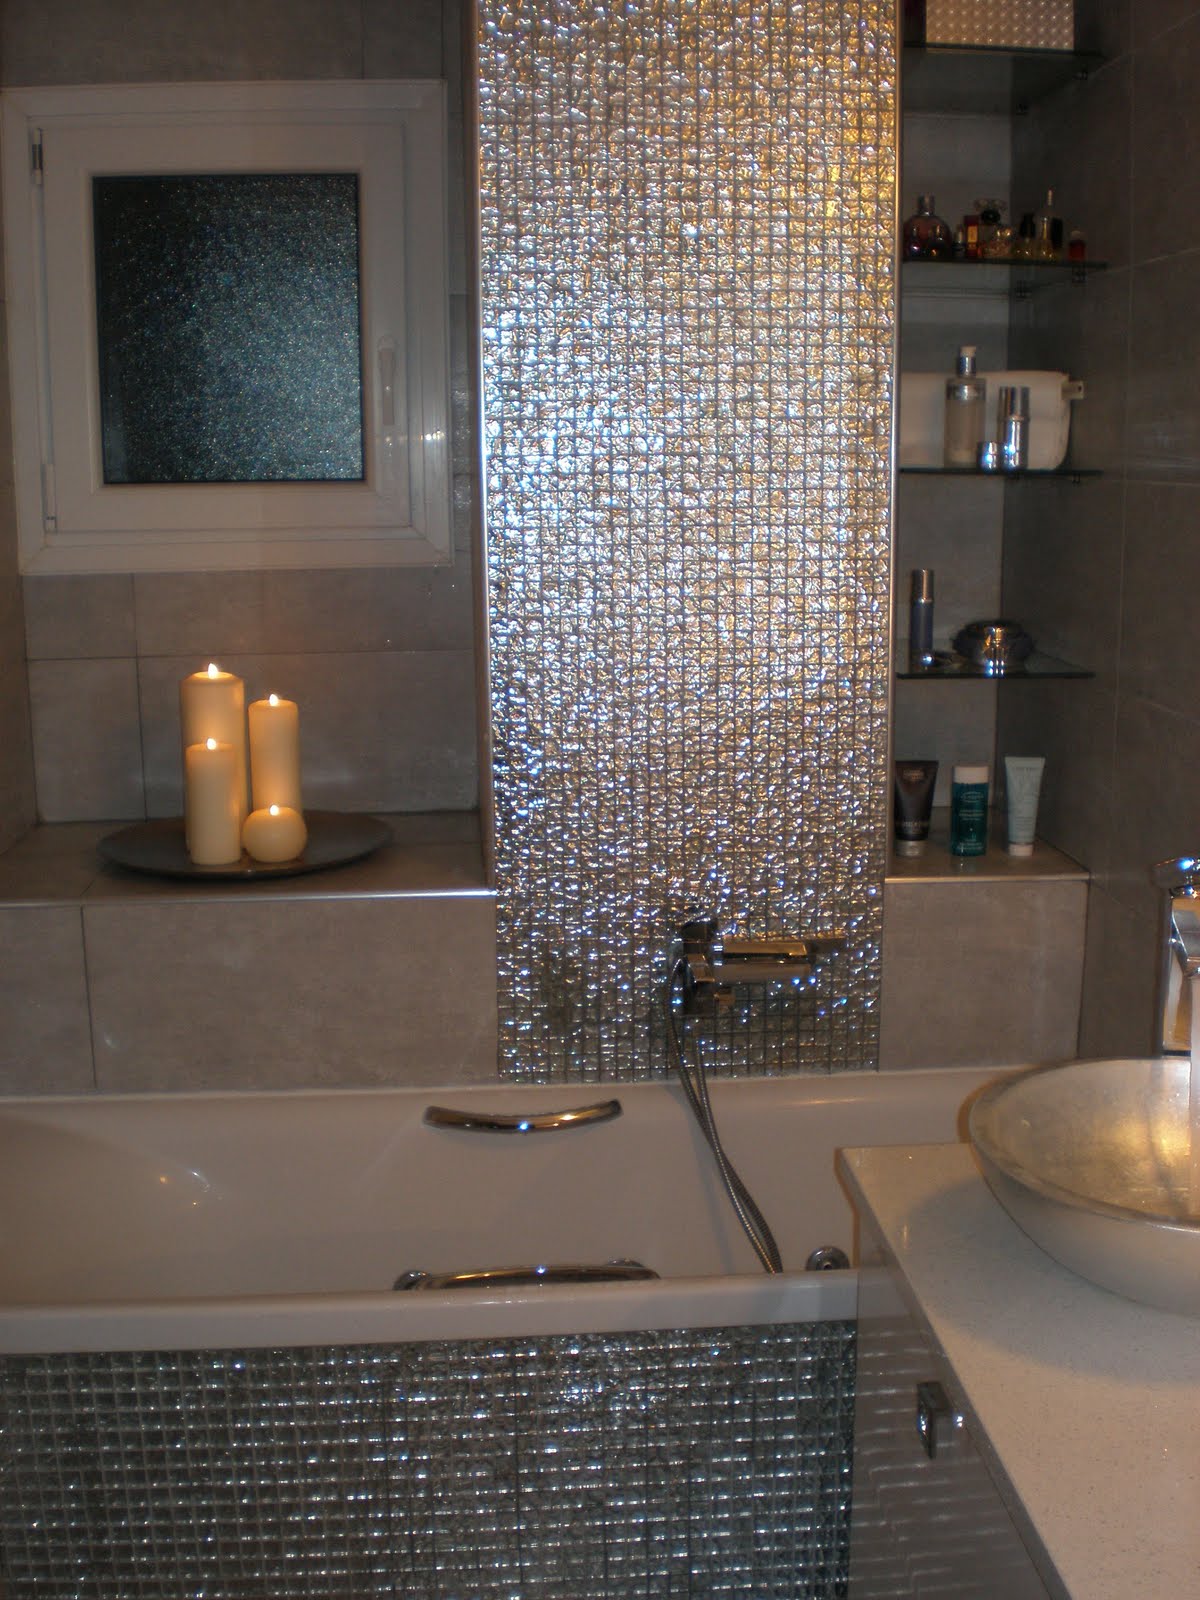 Bathroom Shower Mosaic Tile Ideas, Bathroom Mosaic Tile Ideas